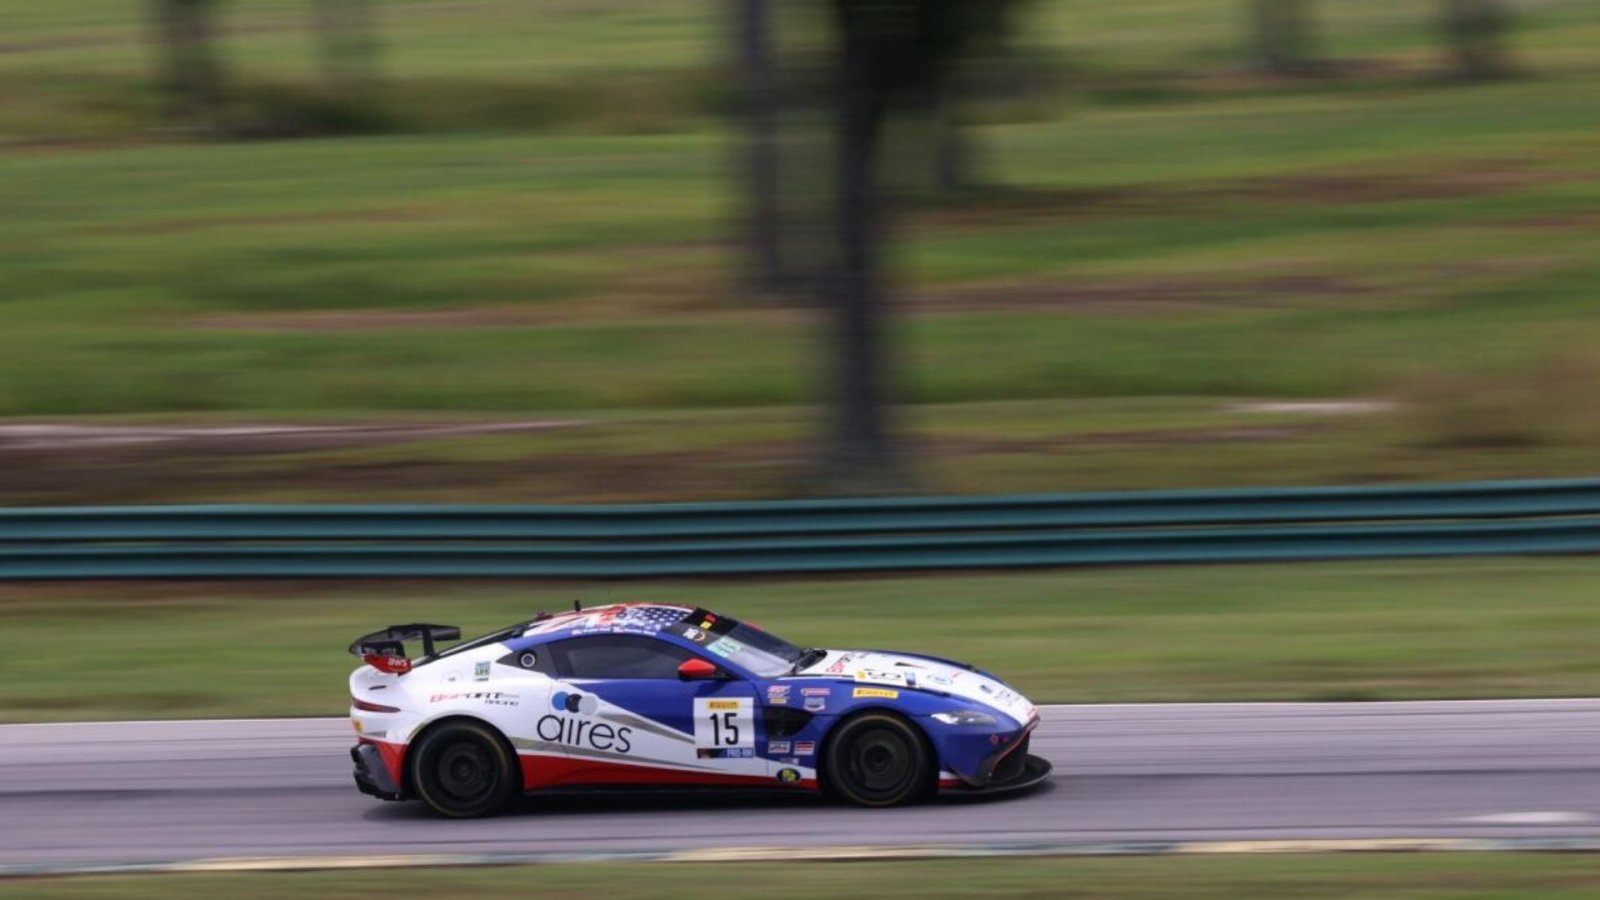 BSport Aston Martin On Top Of Practice 1 at VIRginia International Raceway